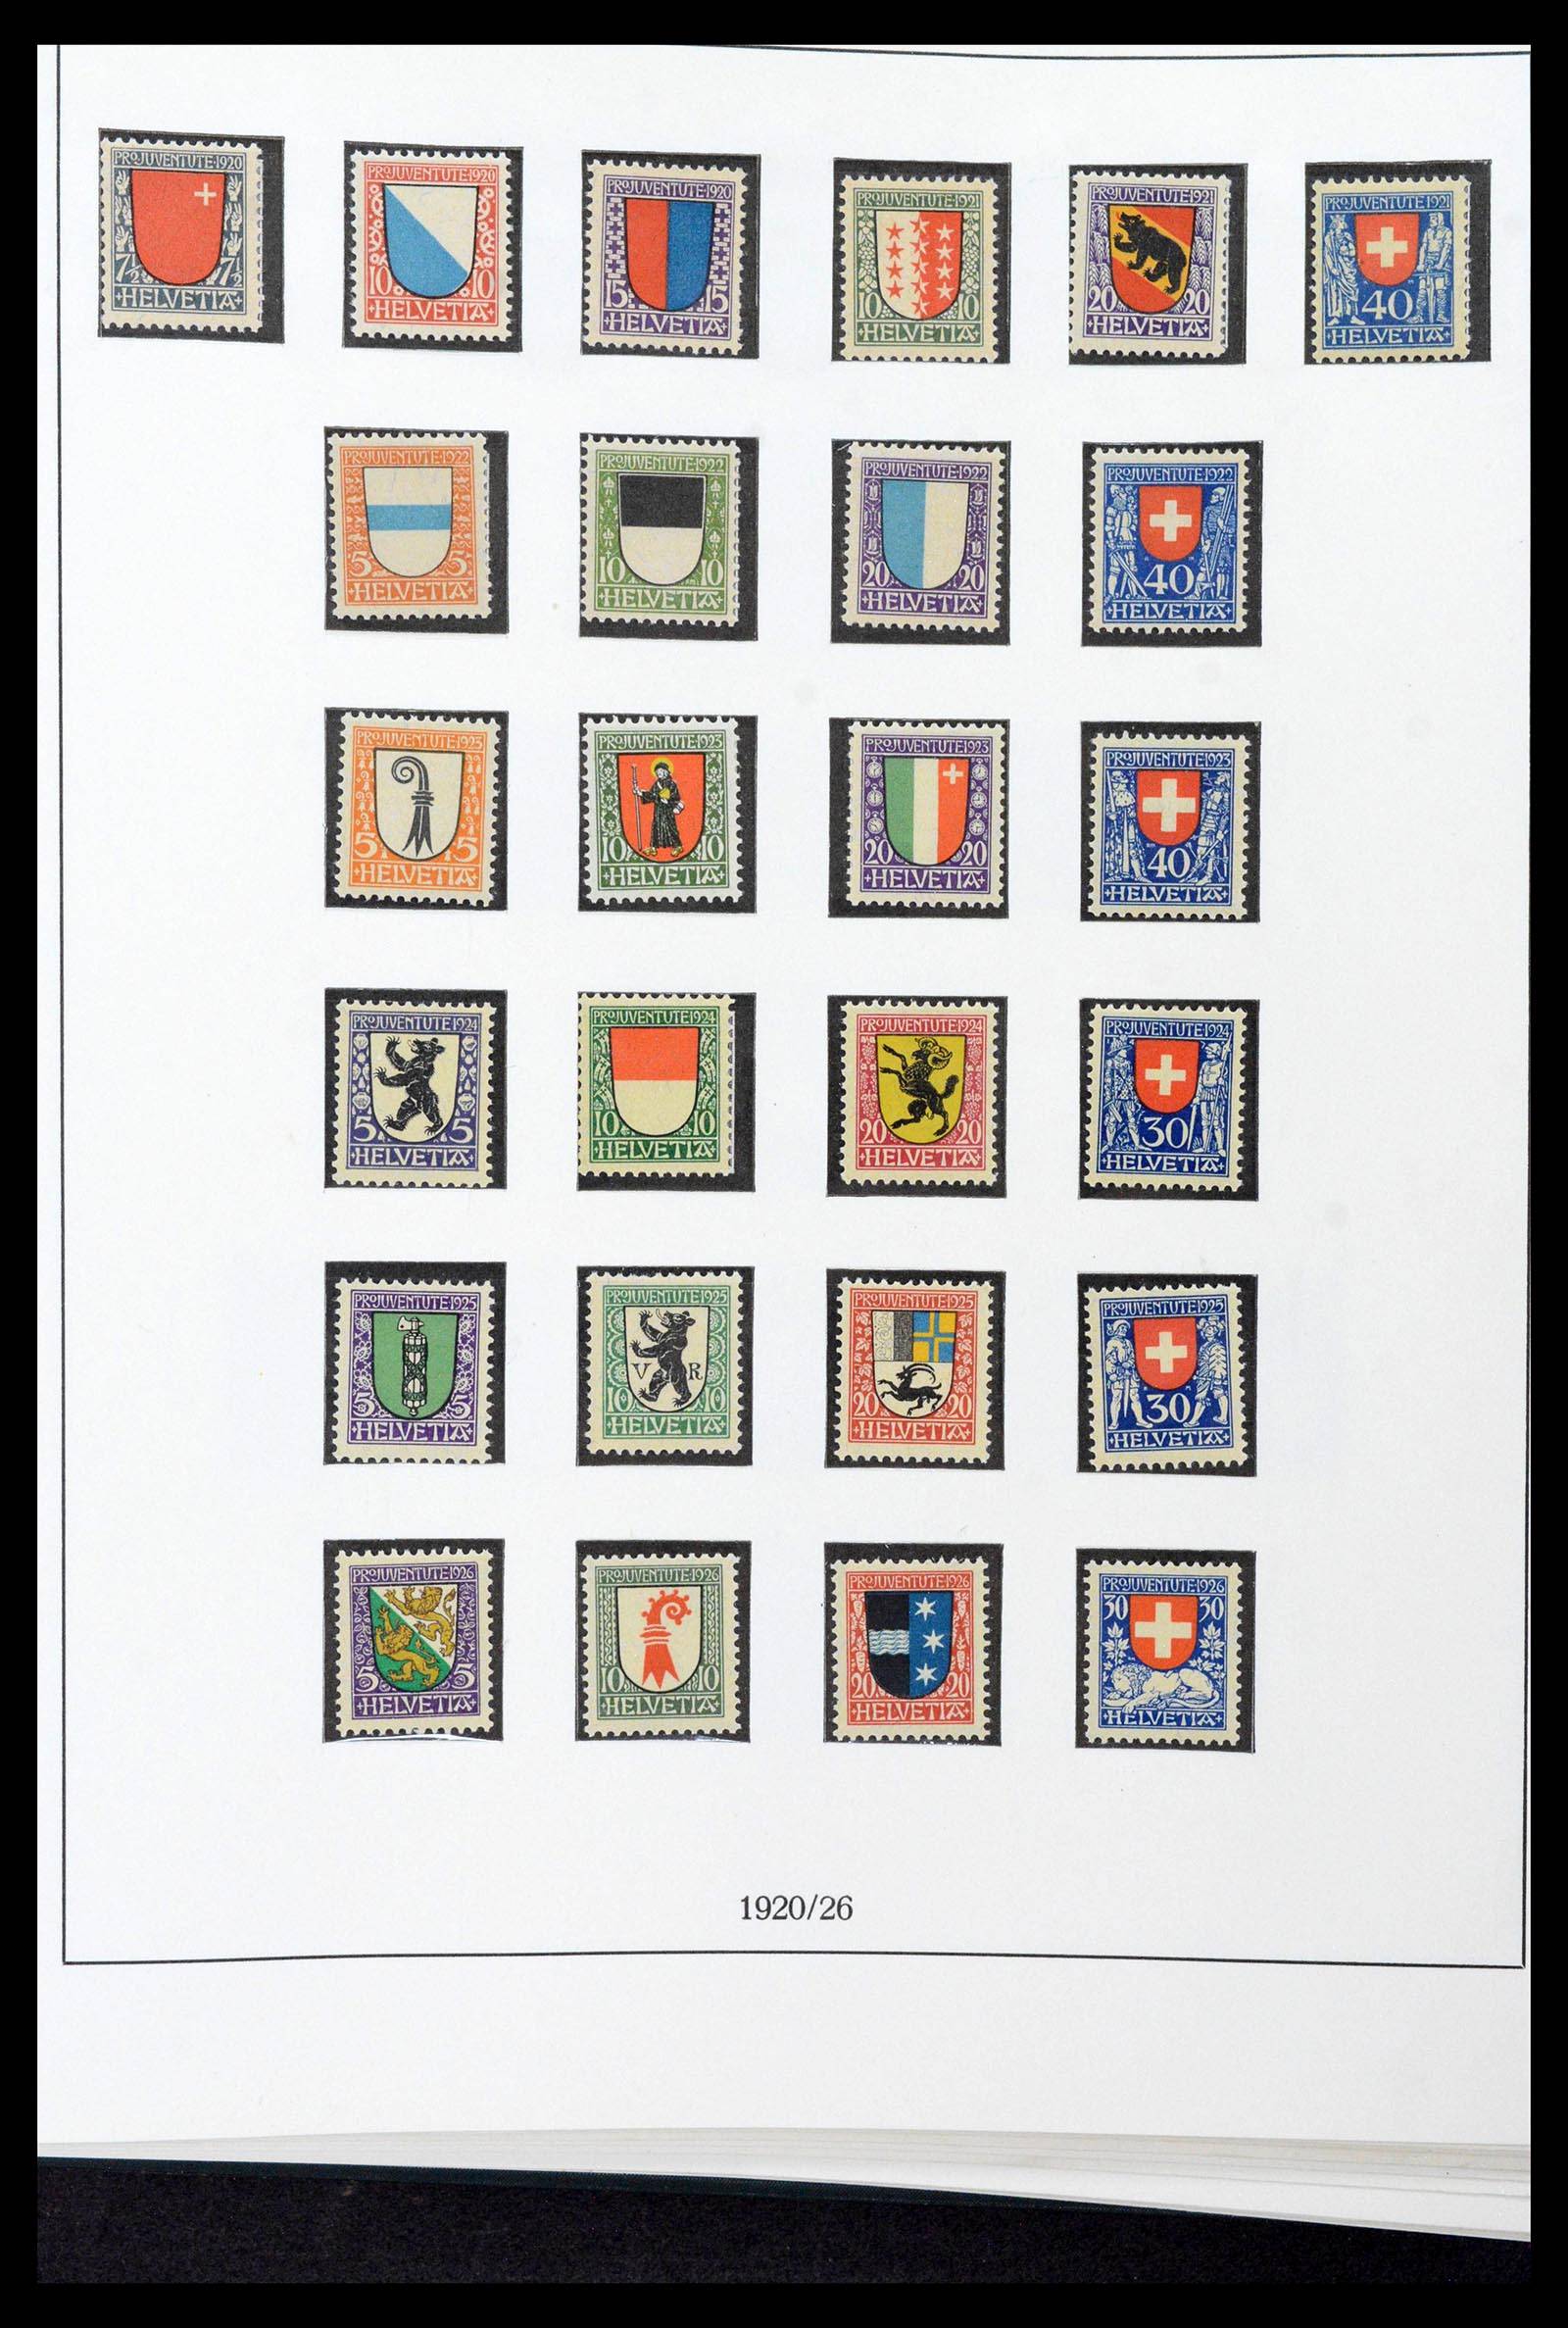 39235 0019 - Stamp collection 39235 Switzerland 1843-1960.